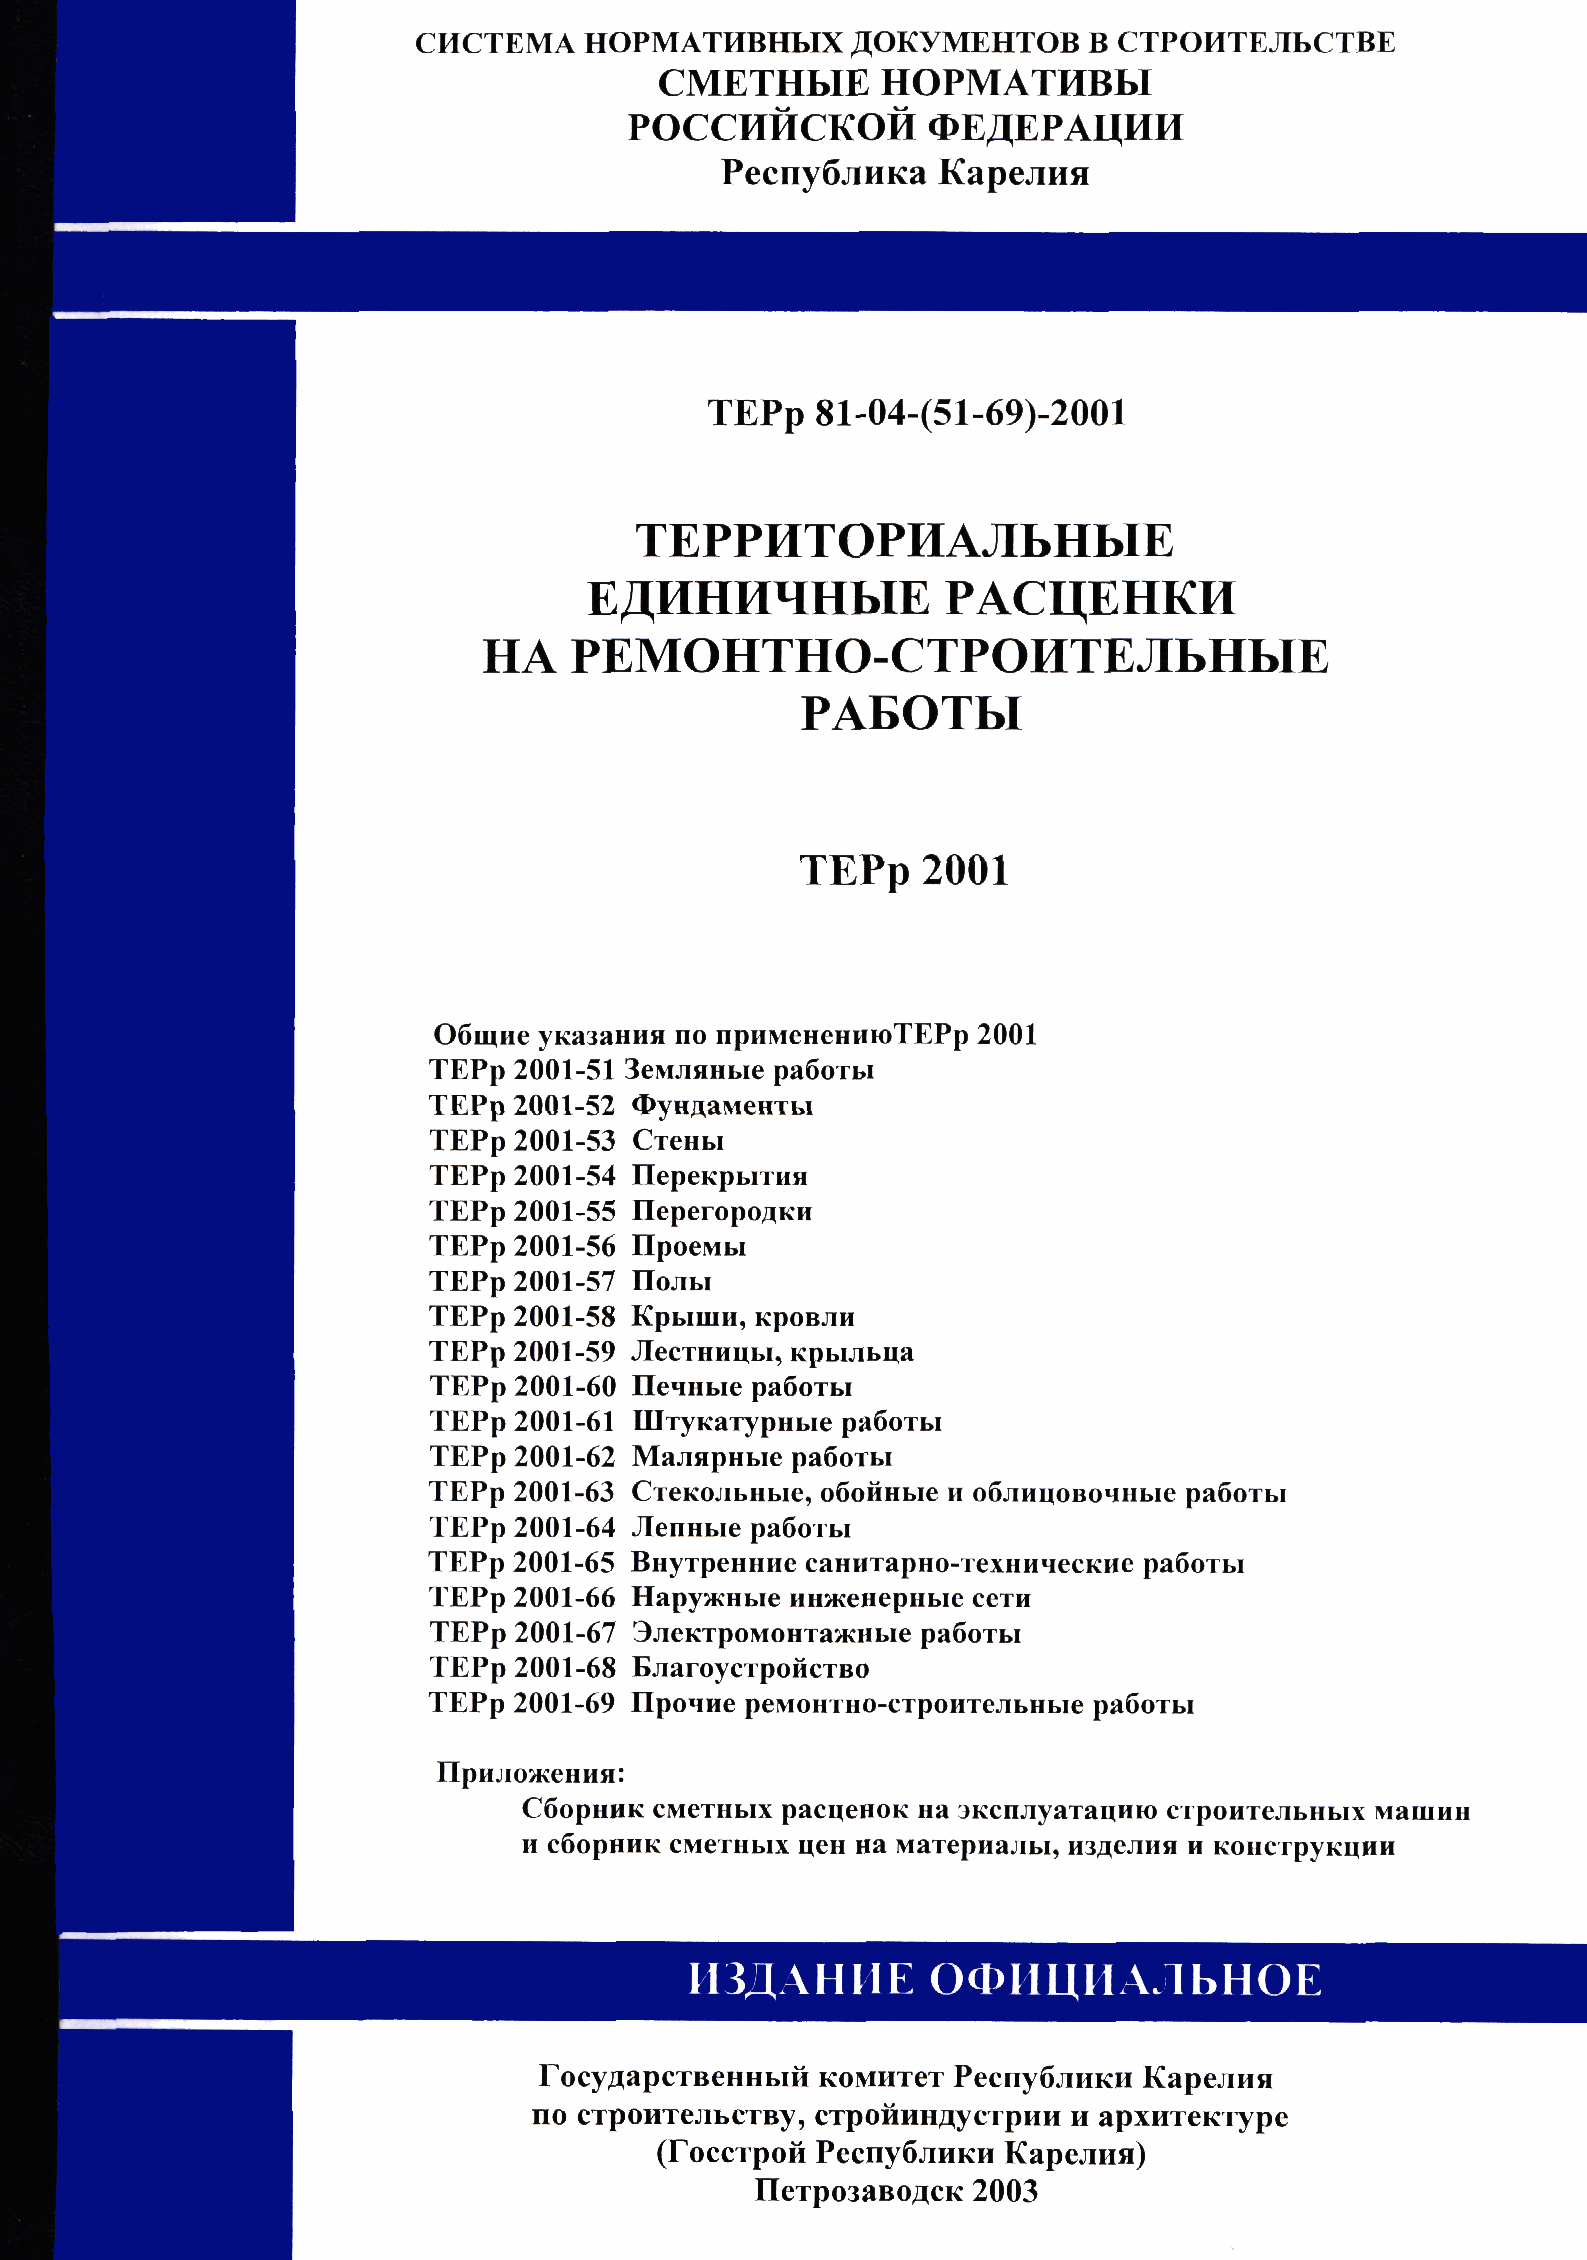 ТЕРр Республика Карелия 2001-63